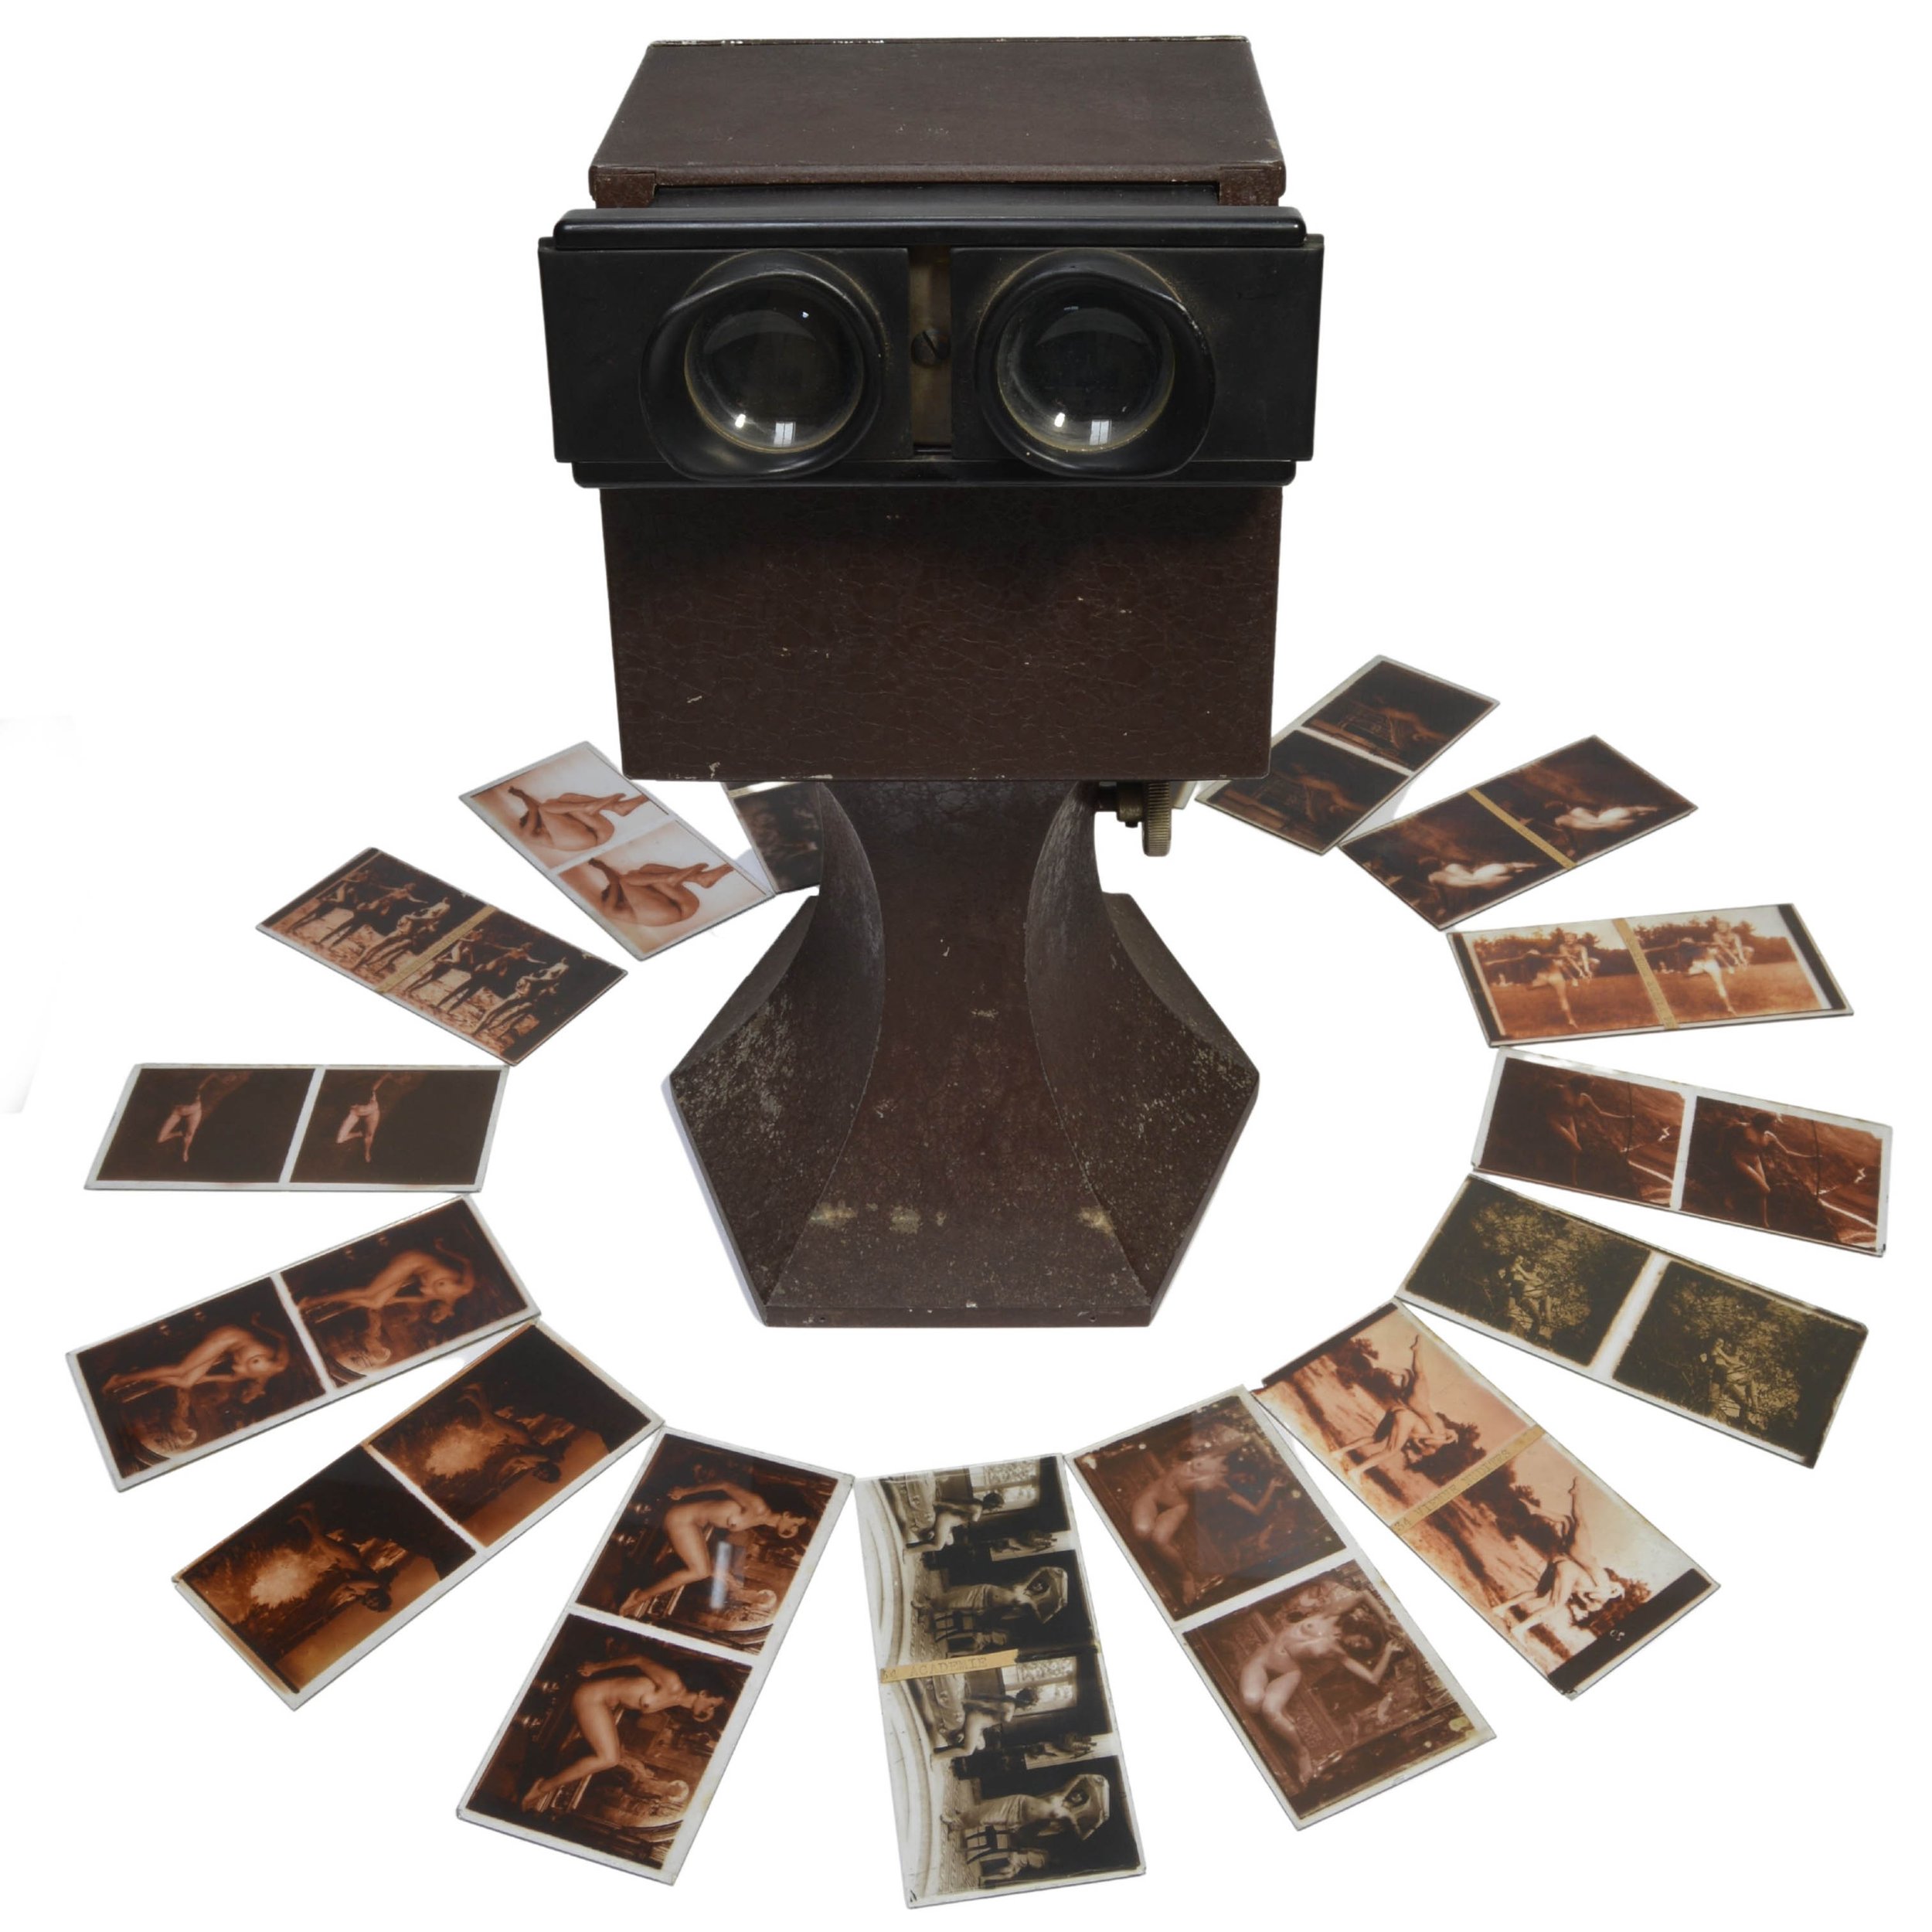 Gaumont tabletop stereoscope